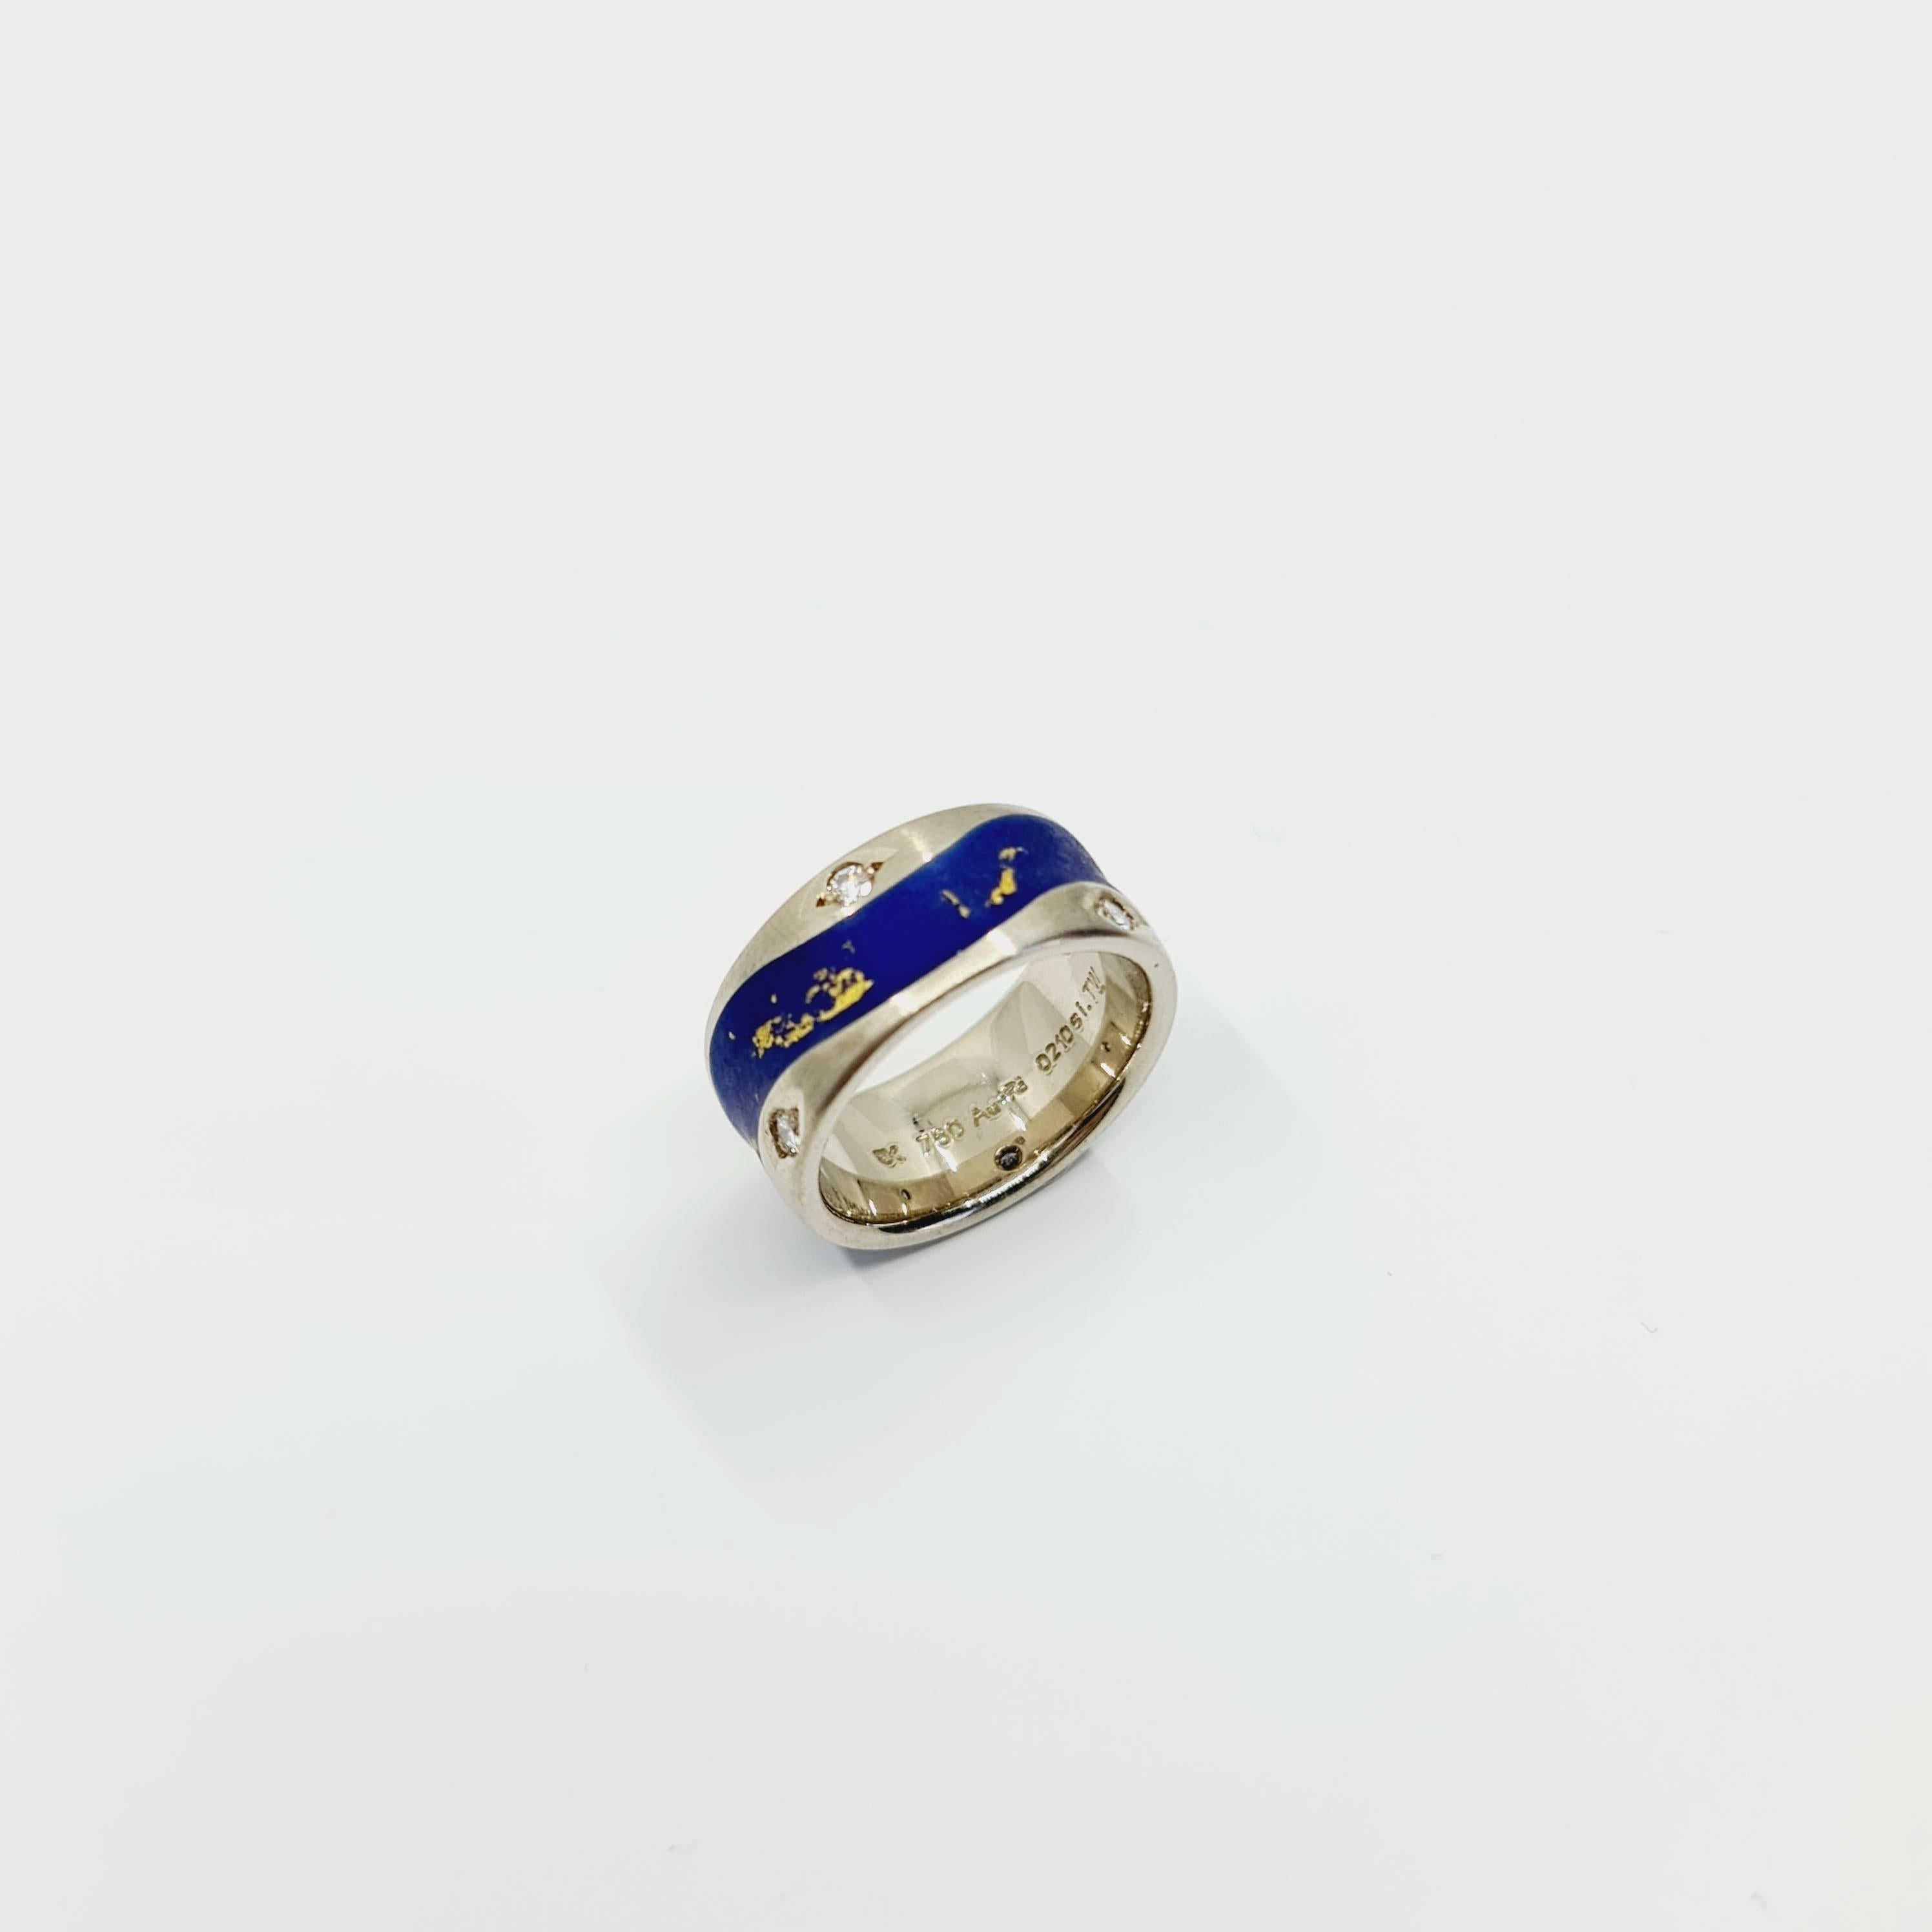 Brilliant Cut 0.21 Carat Diamond Ring G/SI1 18k White Gold, Blue / Yellow Enamel, 6 Brillants For Sale